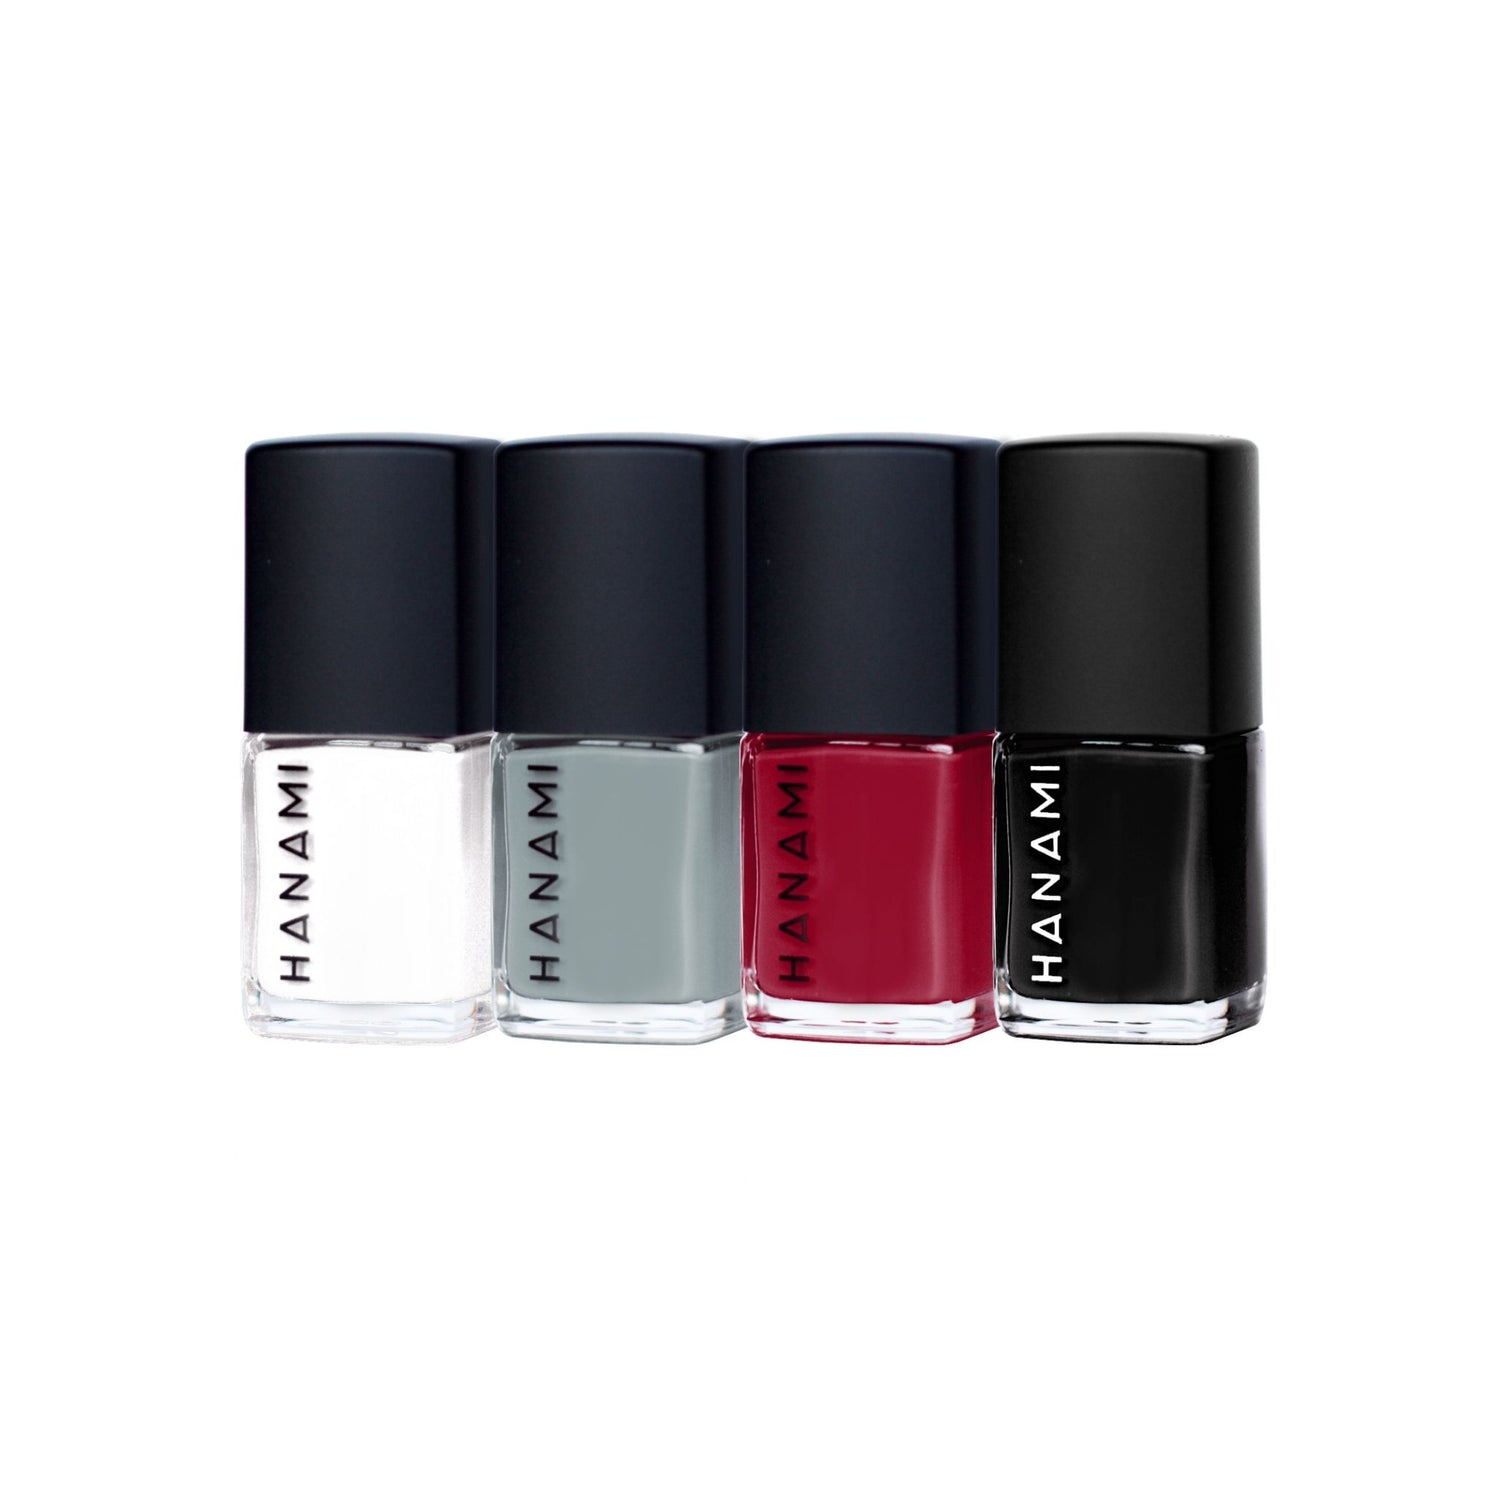 Four Hanami nontoxic nail polish in white, grey, red and black